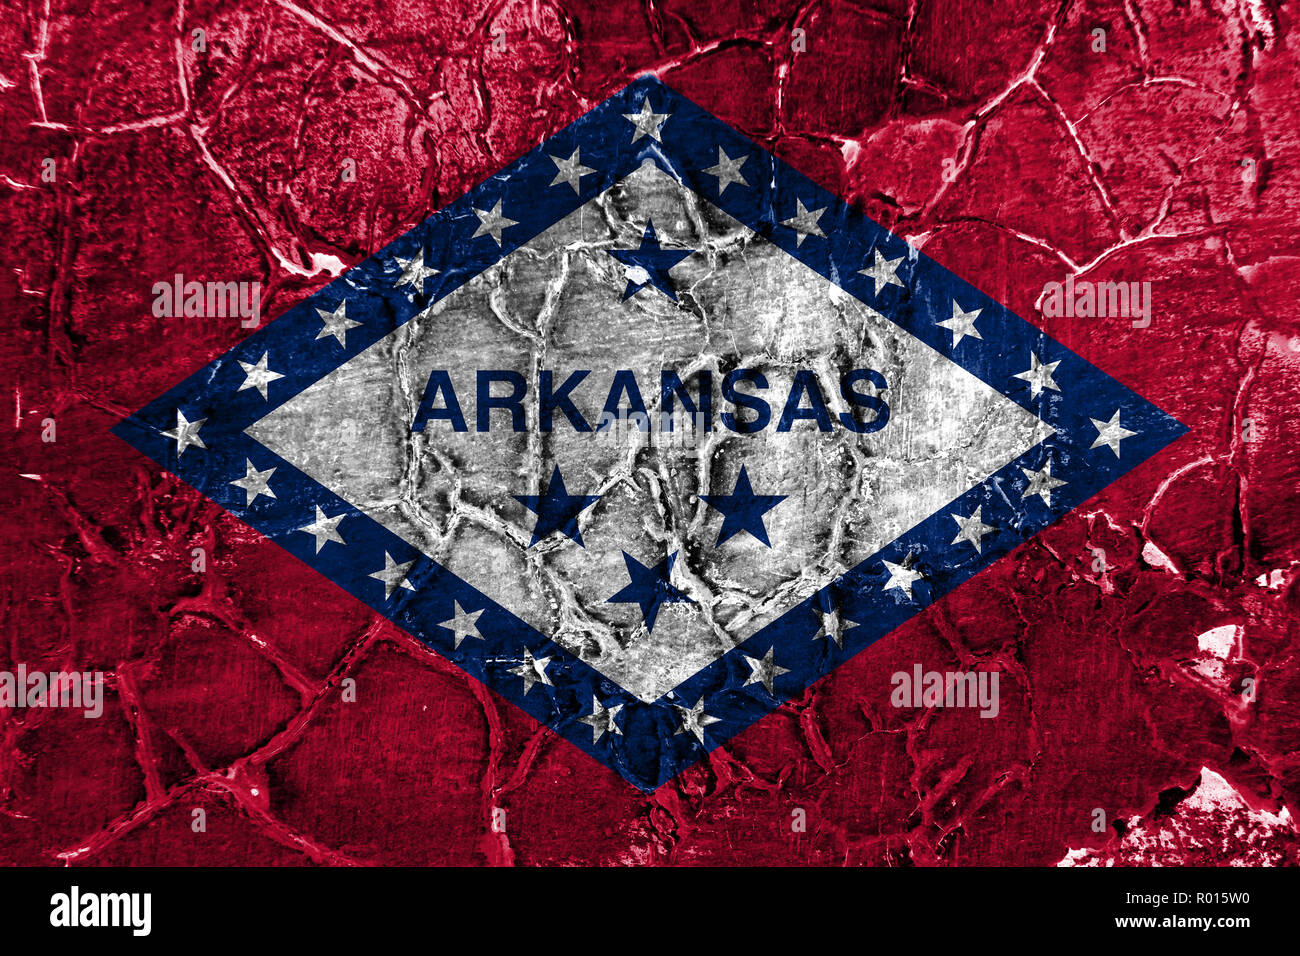 Arkansas state grunge flag, United States of America Stock Photo